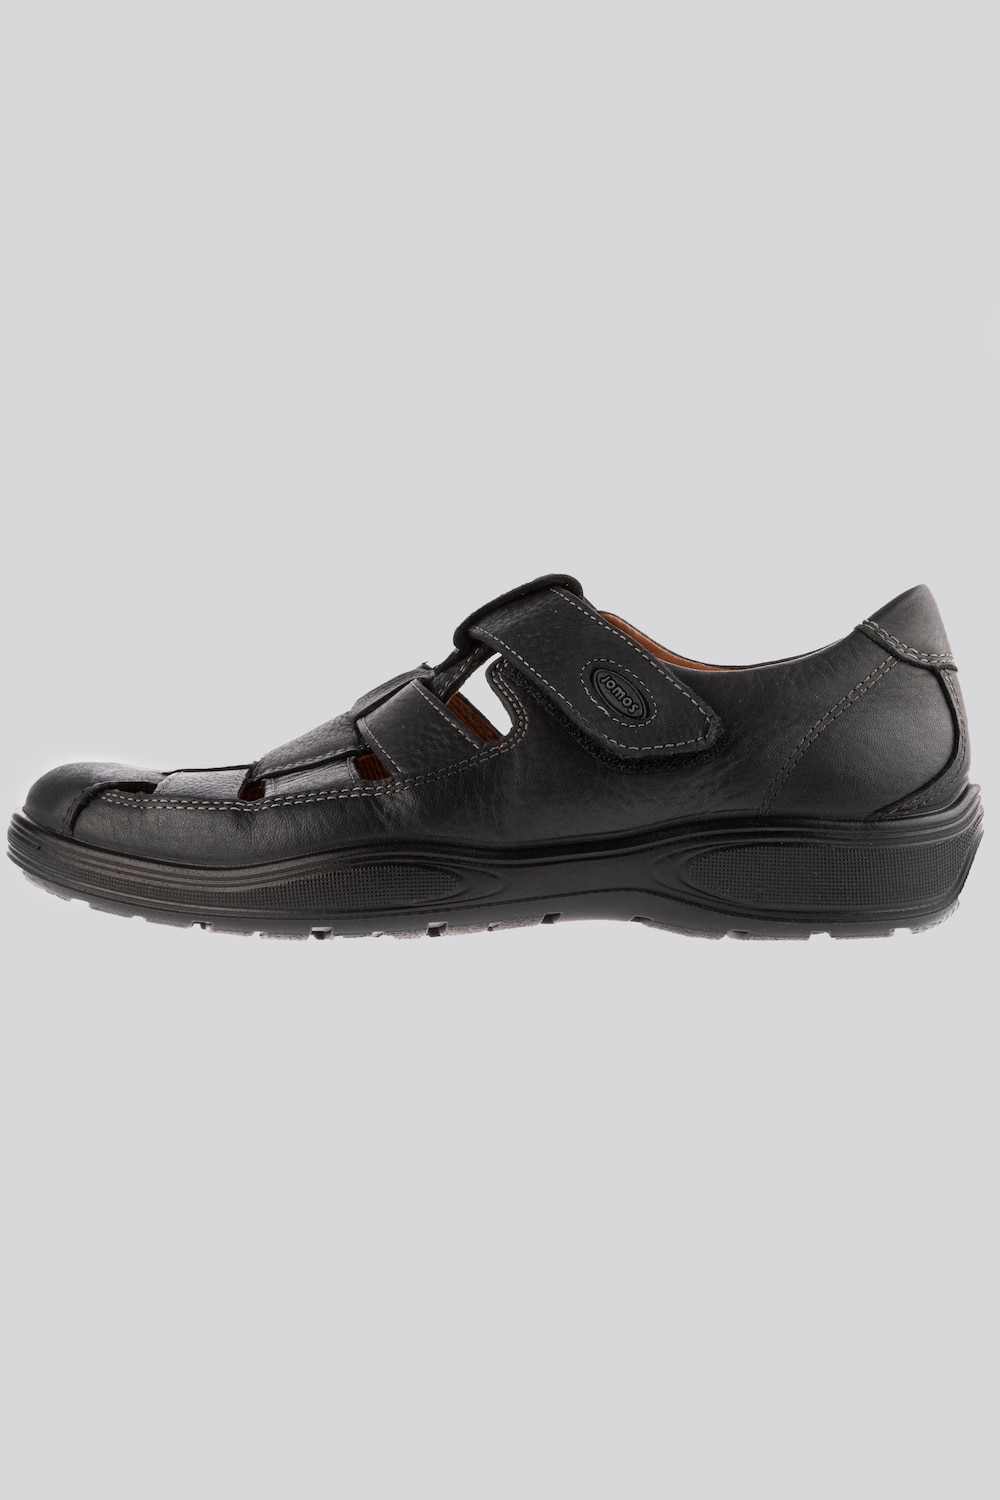 Herren-Sandale, Große Größen, Herren, schwarz, Größe: 49, Leder, JP1880 product